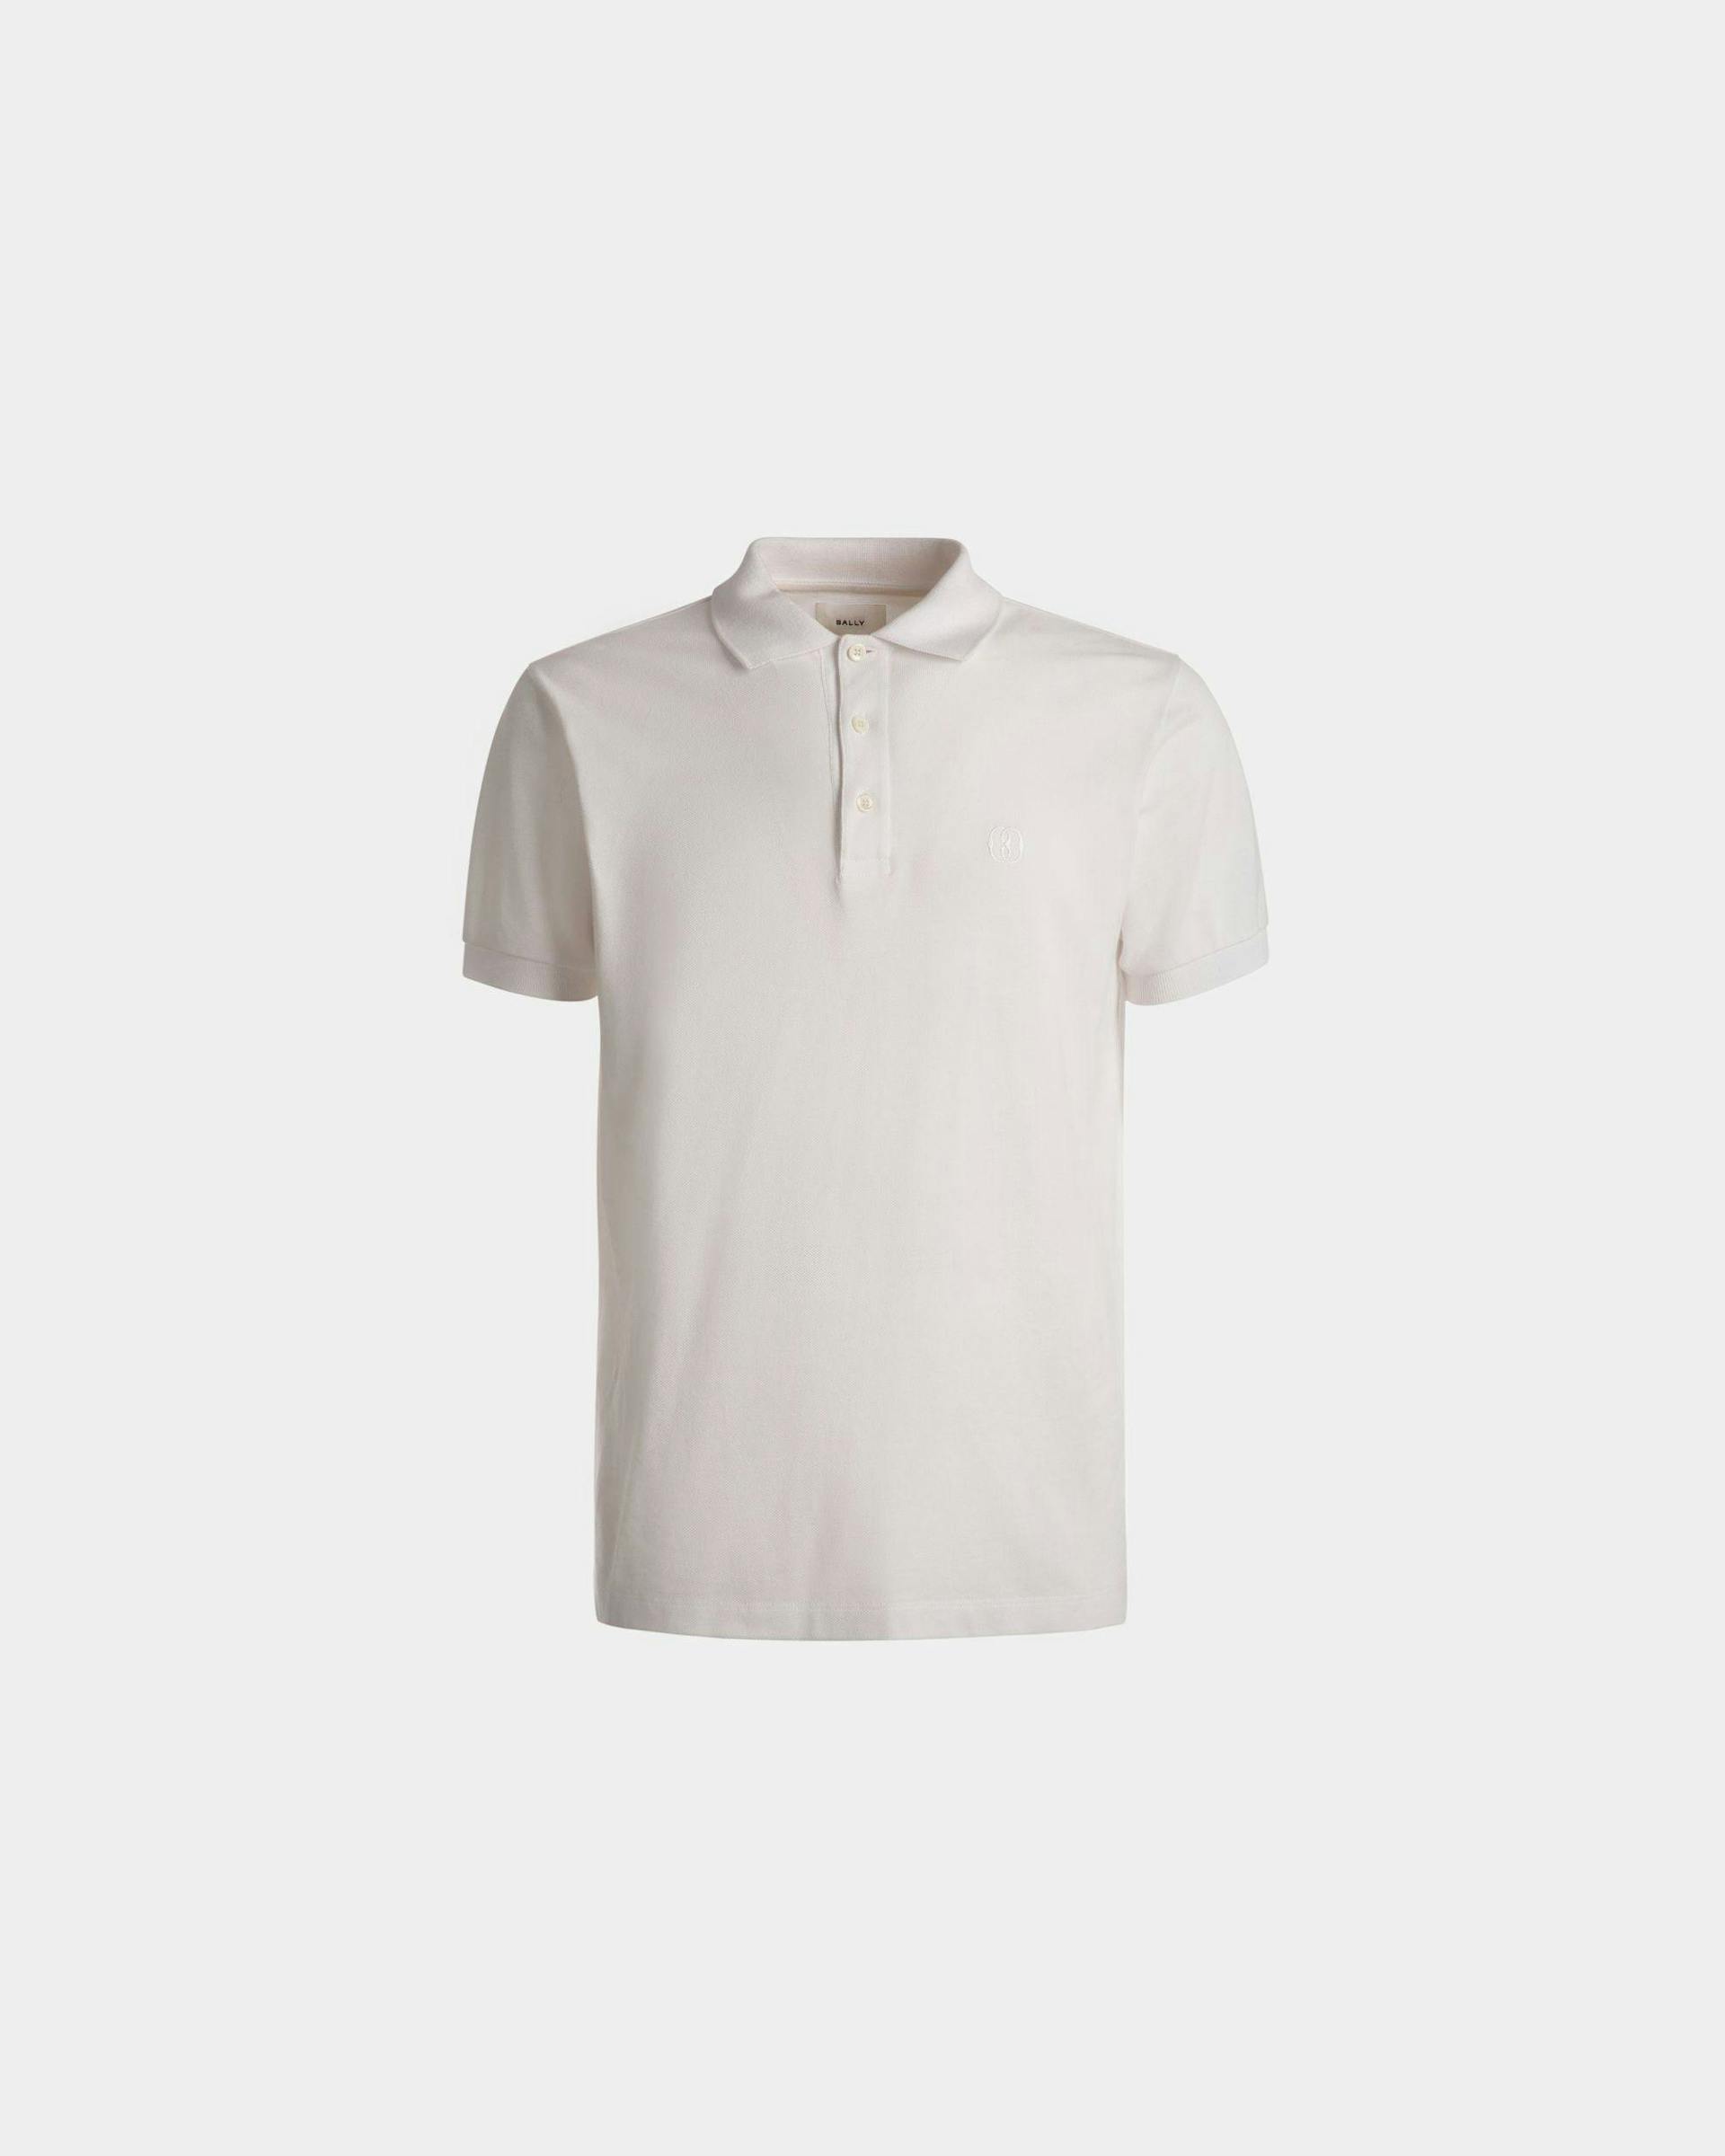 Men's Short Sleeve Polo In White Cotton | Bally | Still Life Front